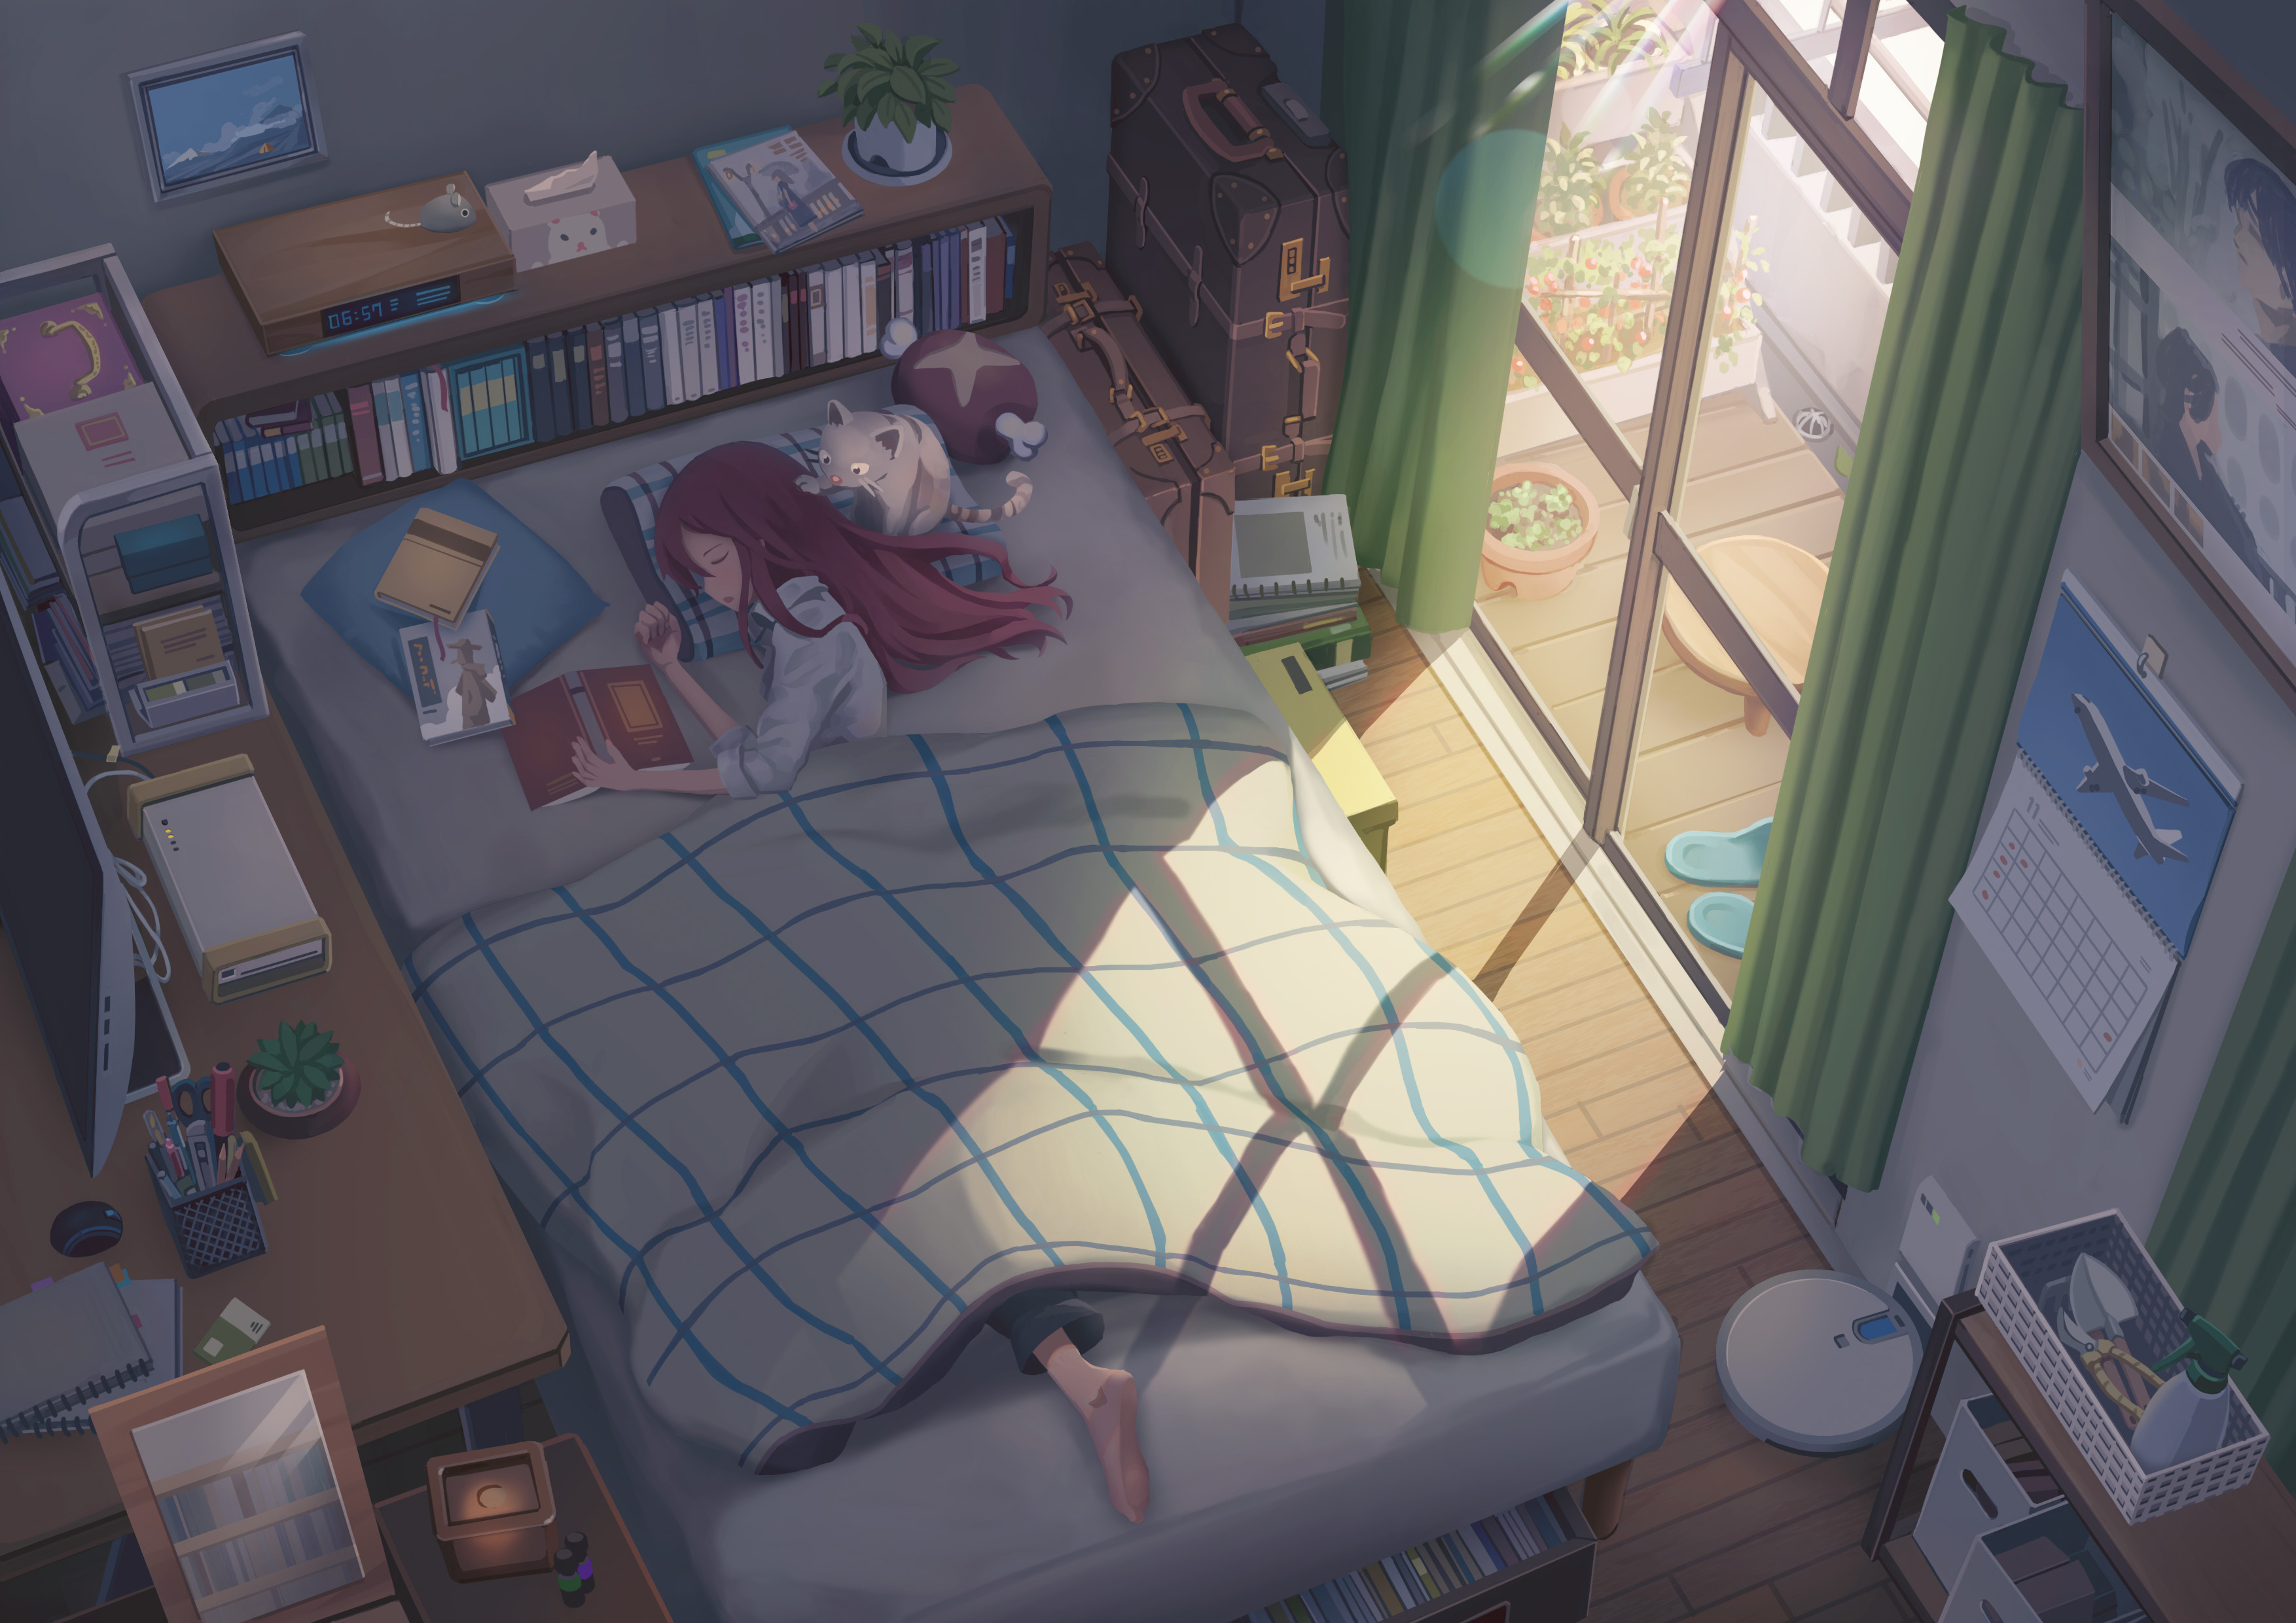 Anime Girls Women Cats Room Interior In Bed Digital Art Mirror Calendar Suitcase Book In Hand Plush  3508x2480